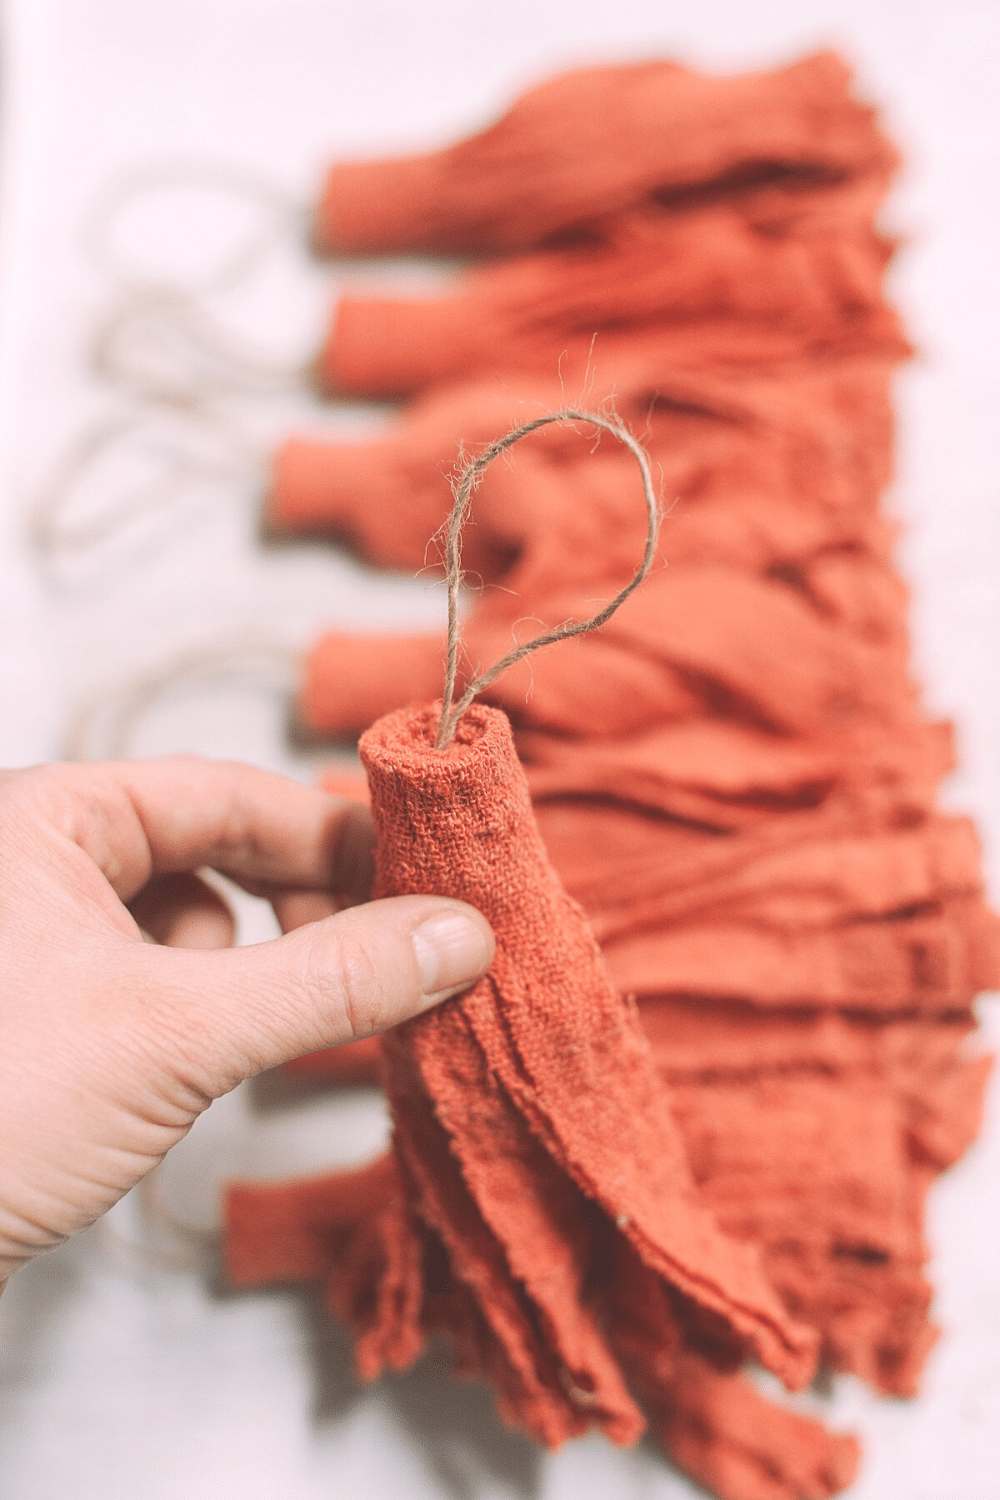 How to Make Fabric Tassels